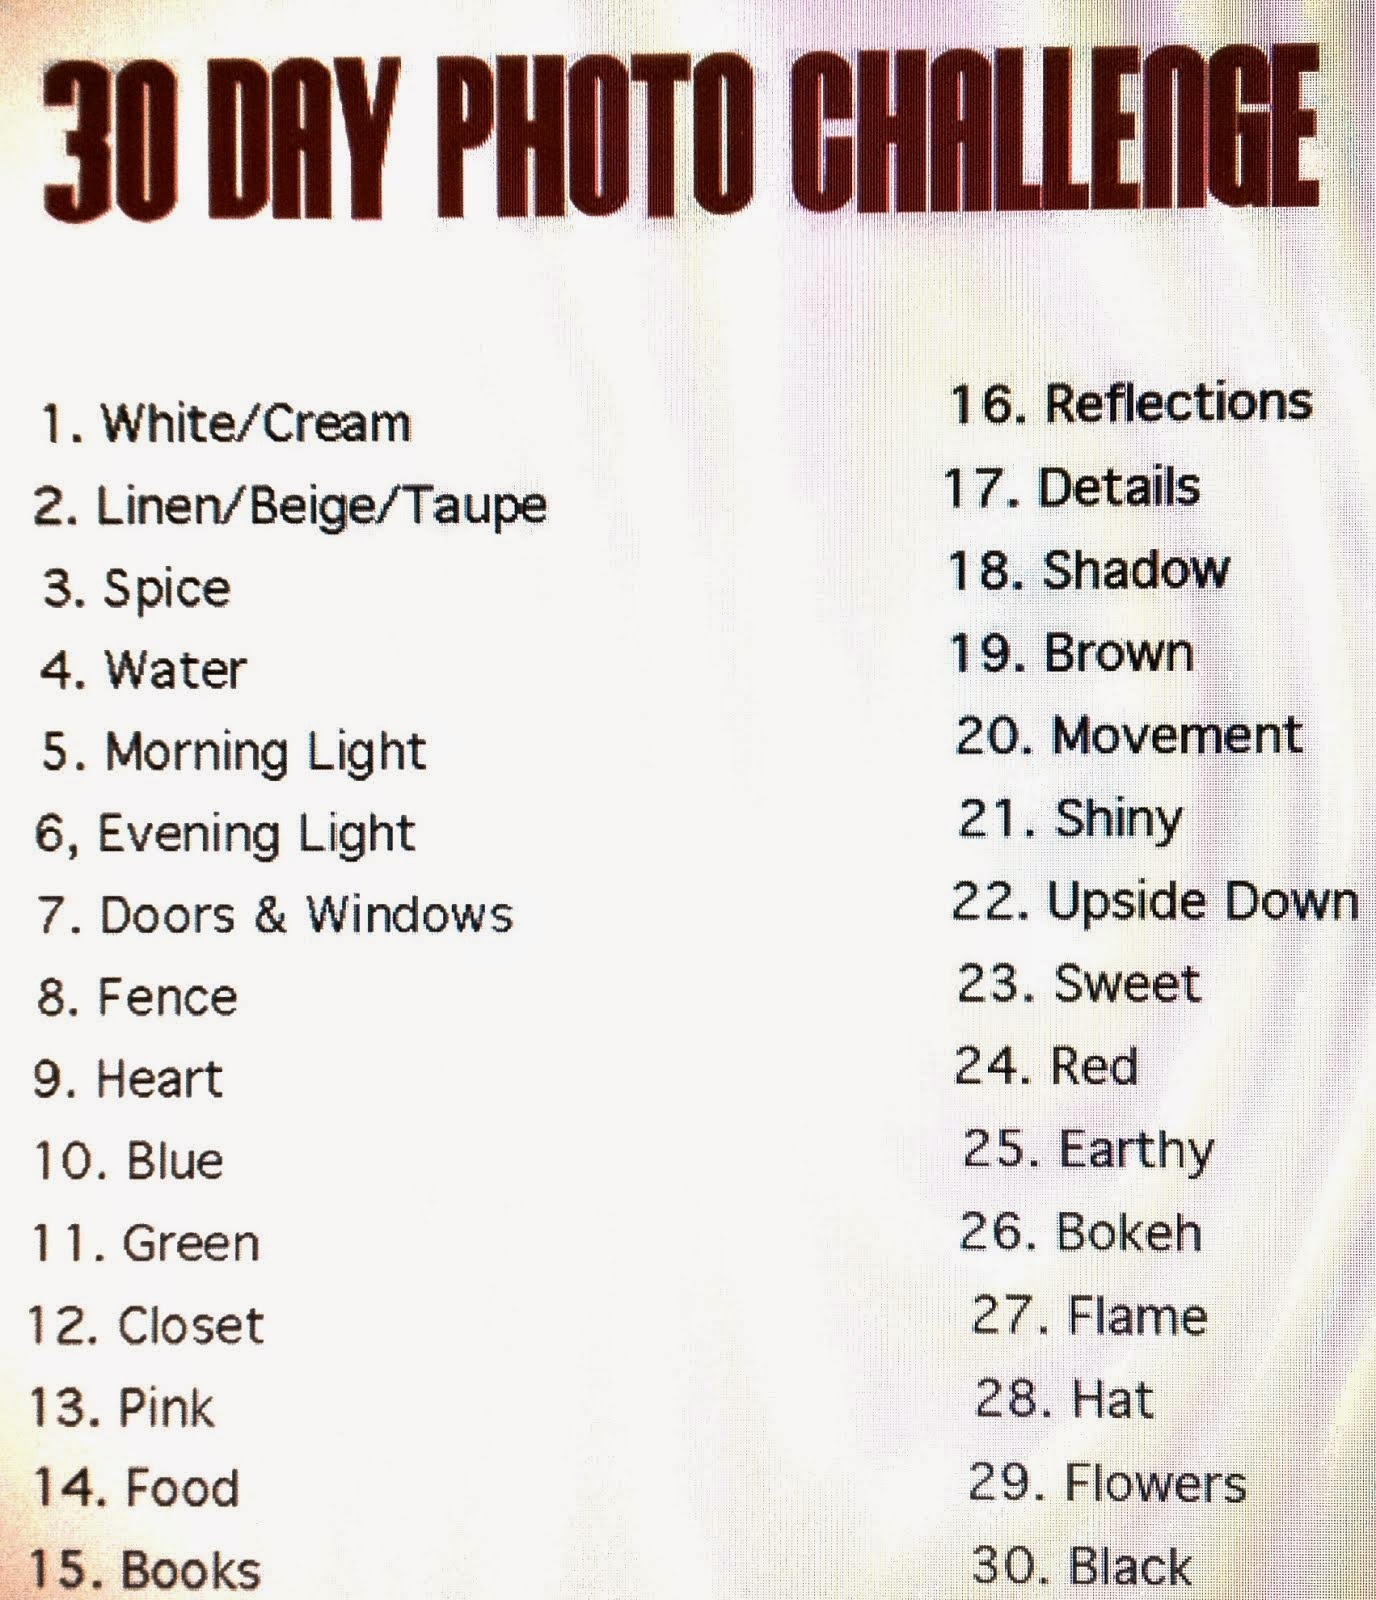 30 Day Photo Challenge #2